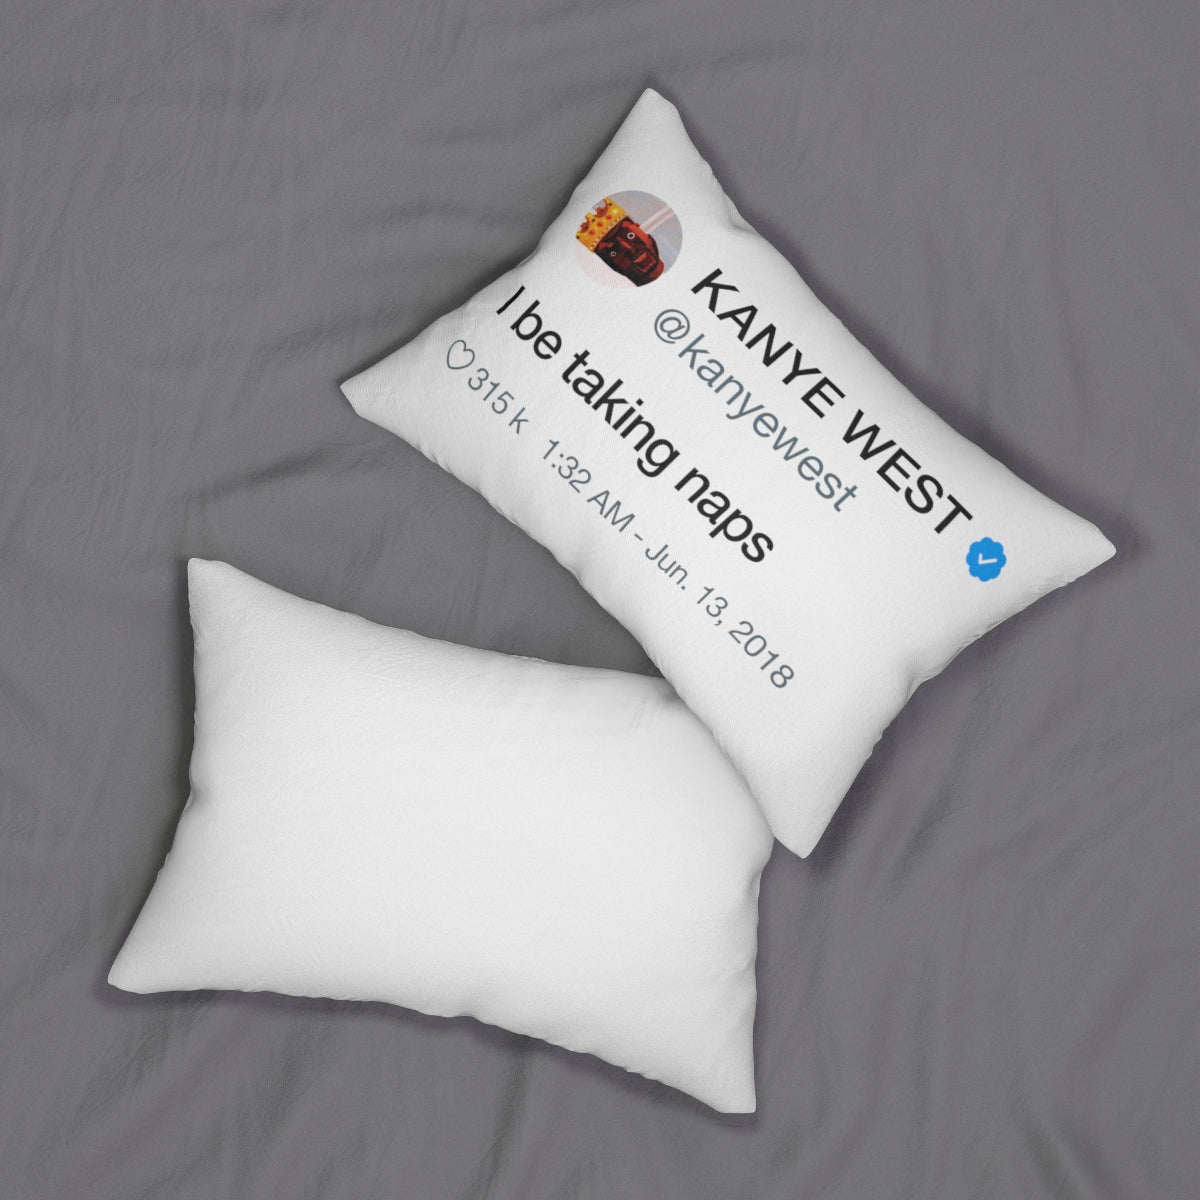 Kanye West Naps White Pillow + Pillow Sham